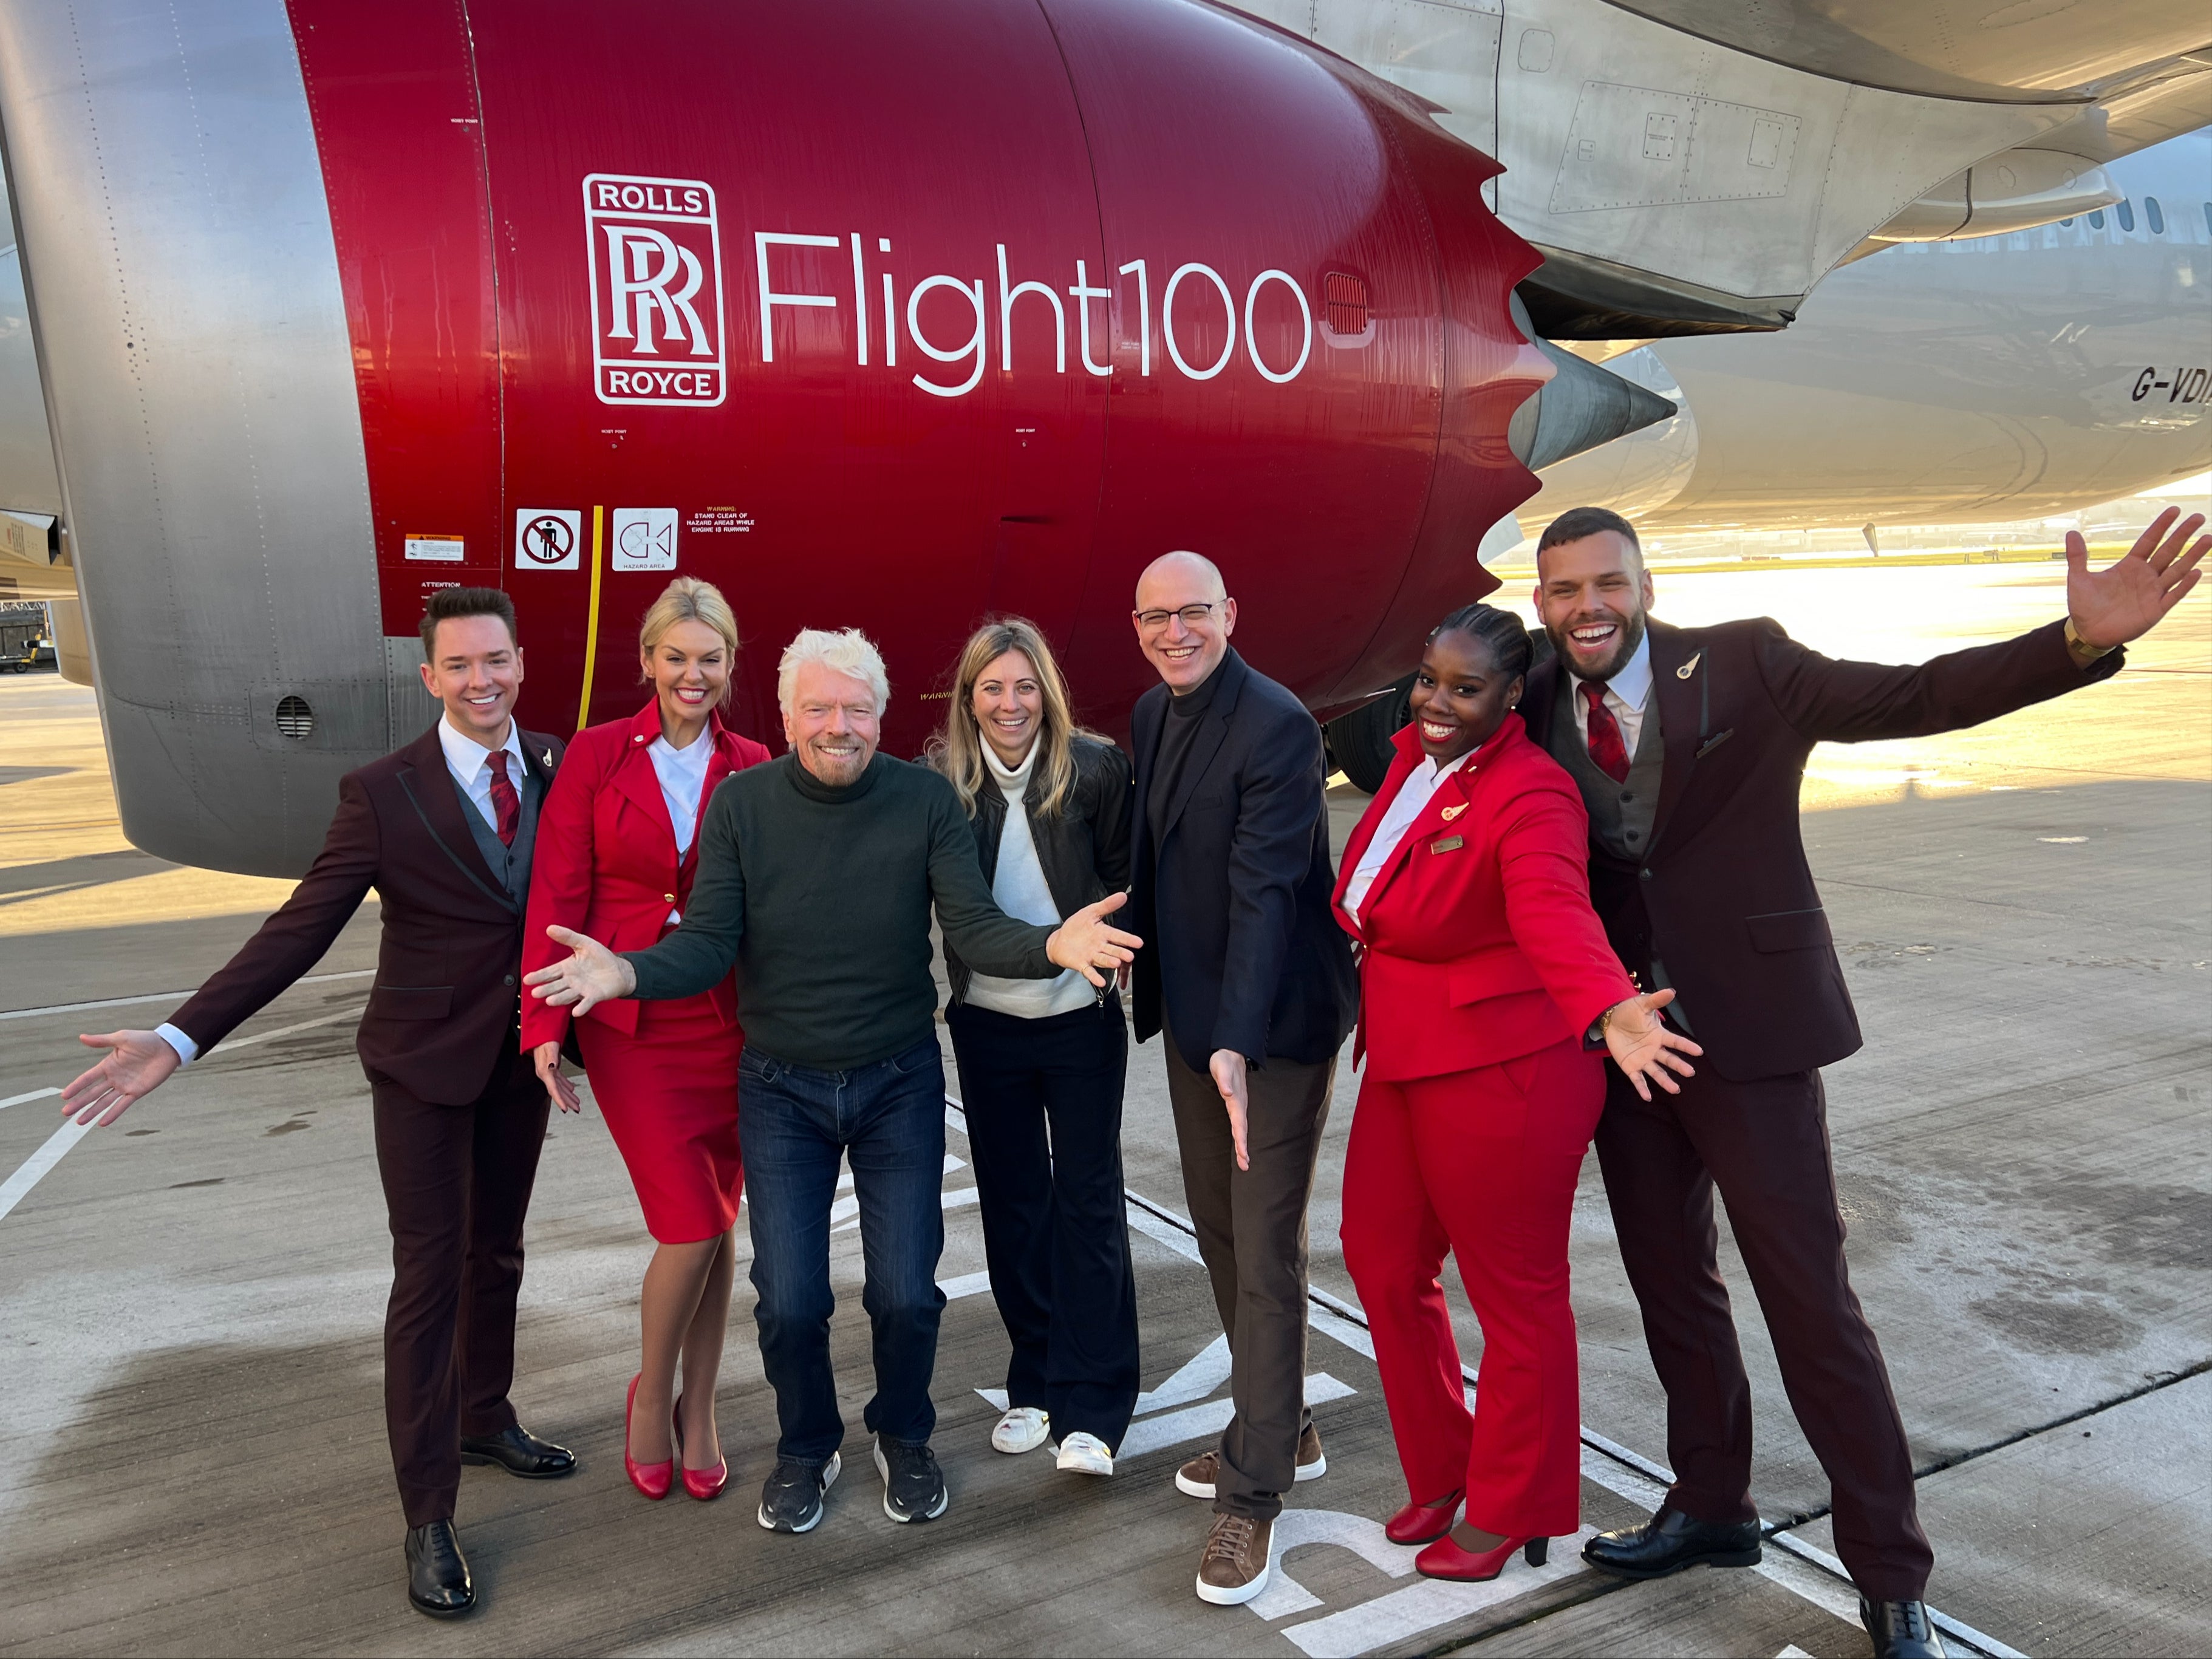 Send off: Sir Richard Branson and the Virgin Atlantic team at Heathrow before departure